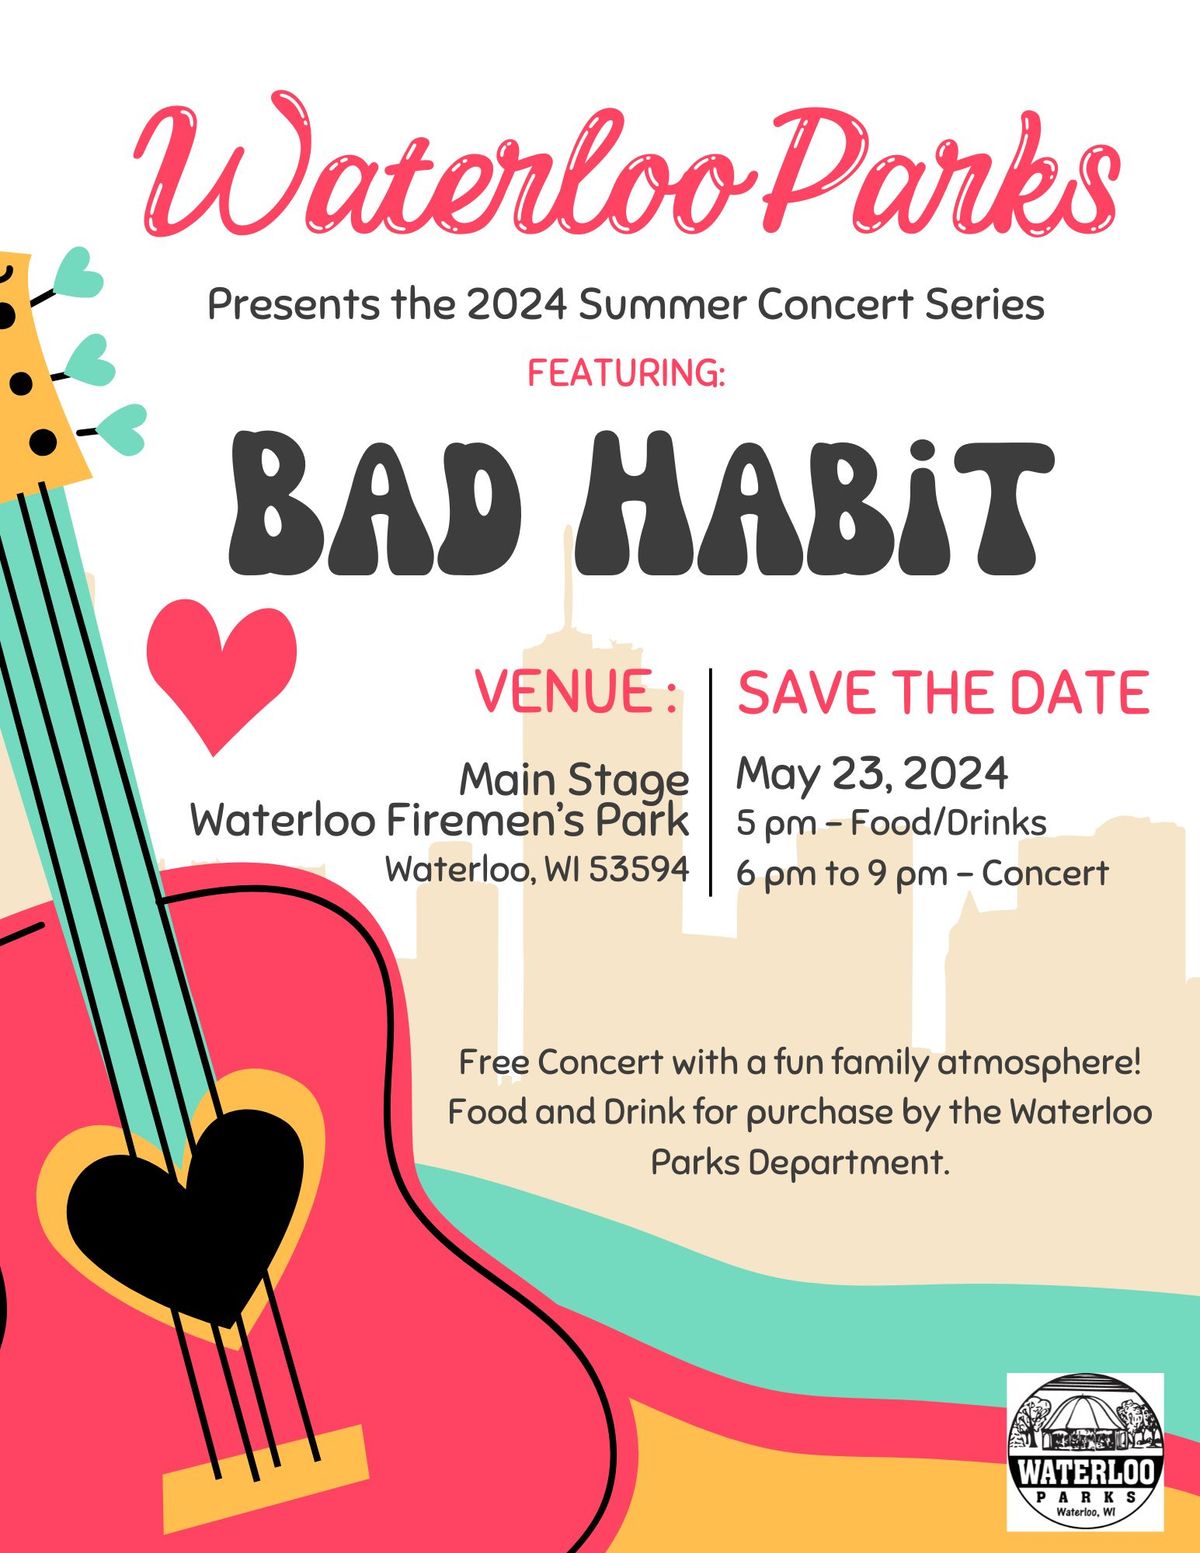 Summer Concert Series presenting Bad Habit